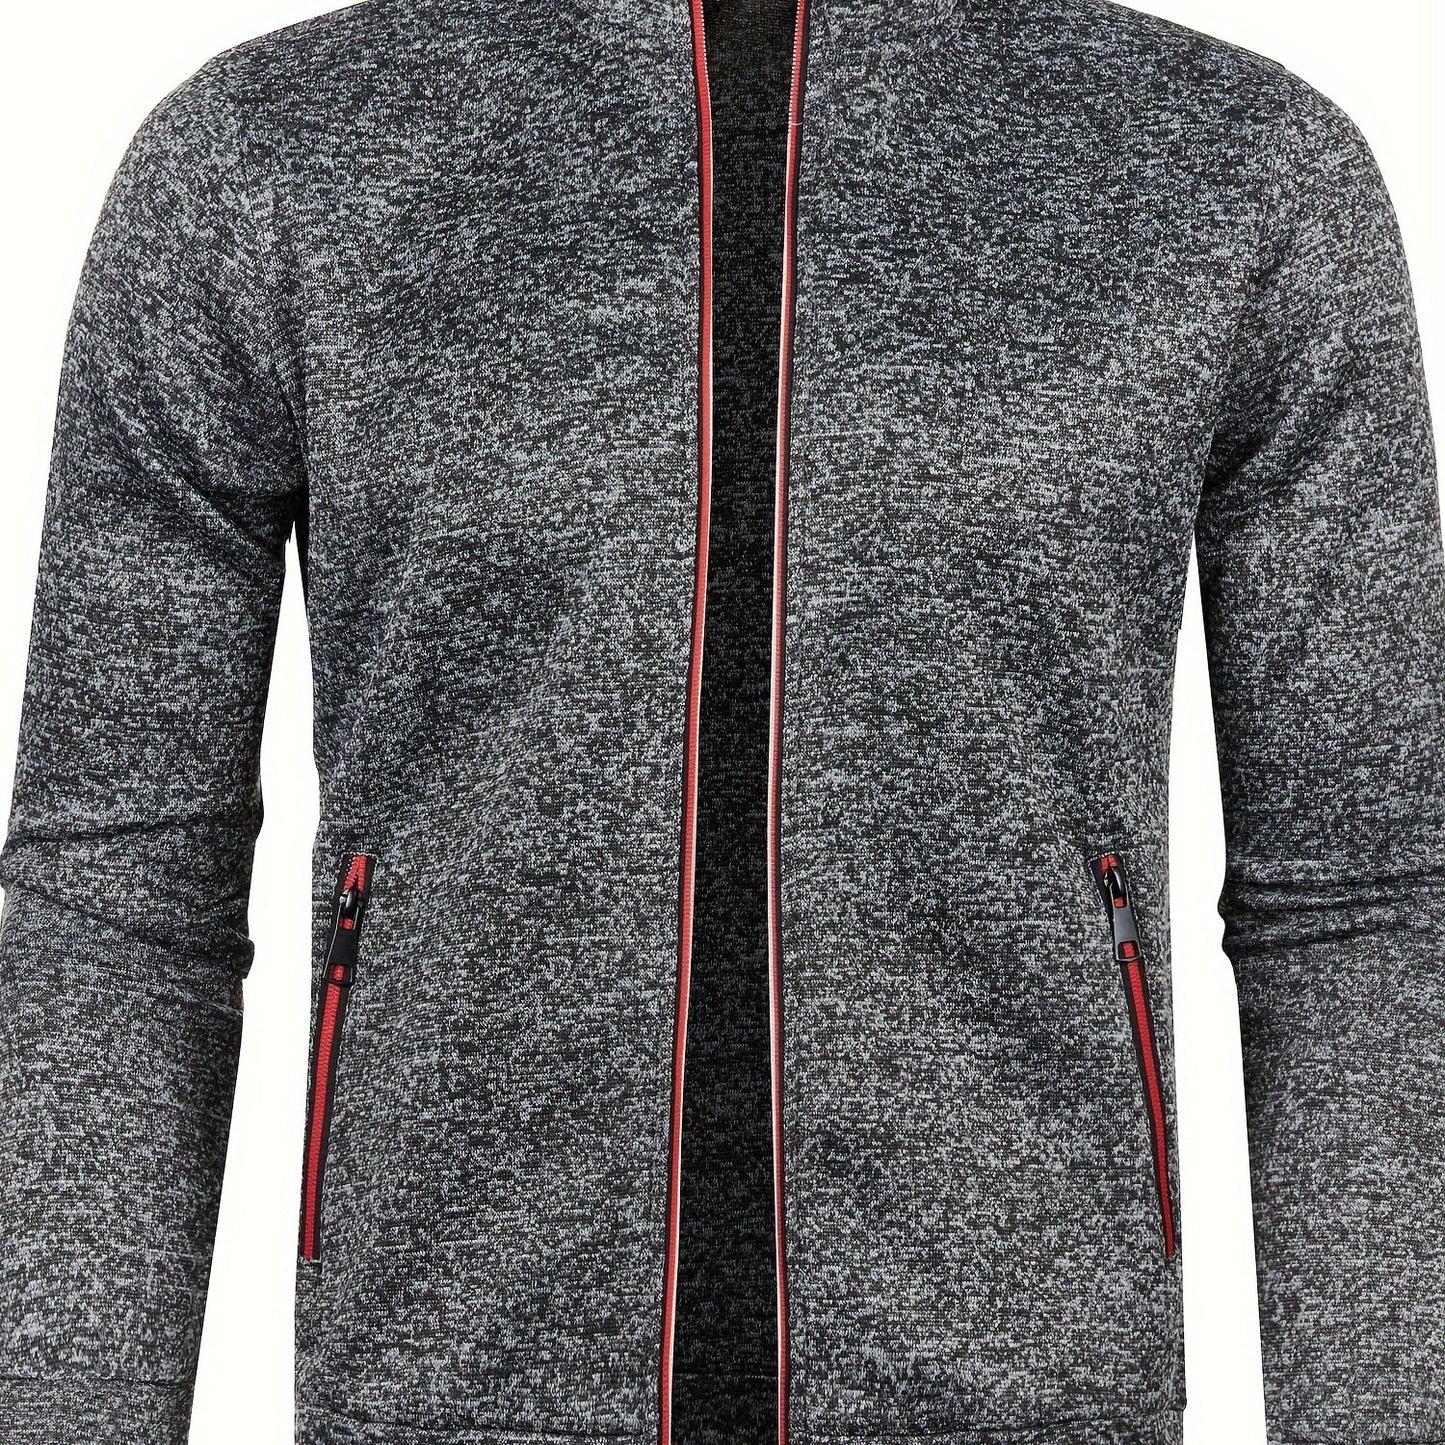 Foruwish - Elegant Mid Stretch Cardigan, Men's Casual Full Zip Up Cardigan Sweater Coat For Fall Winter